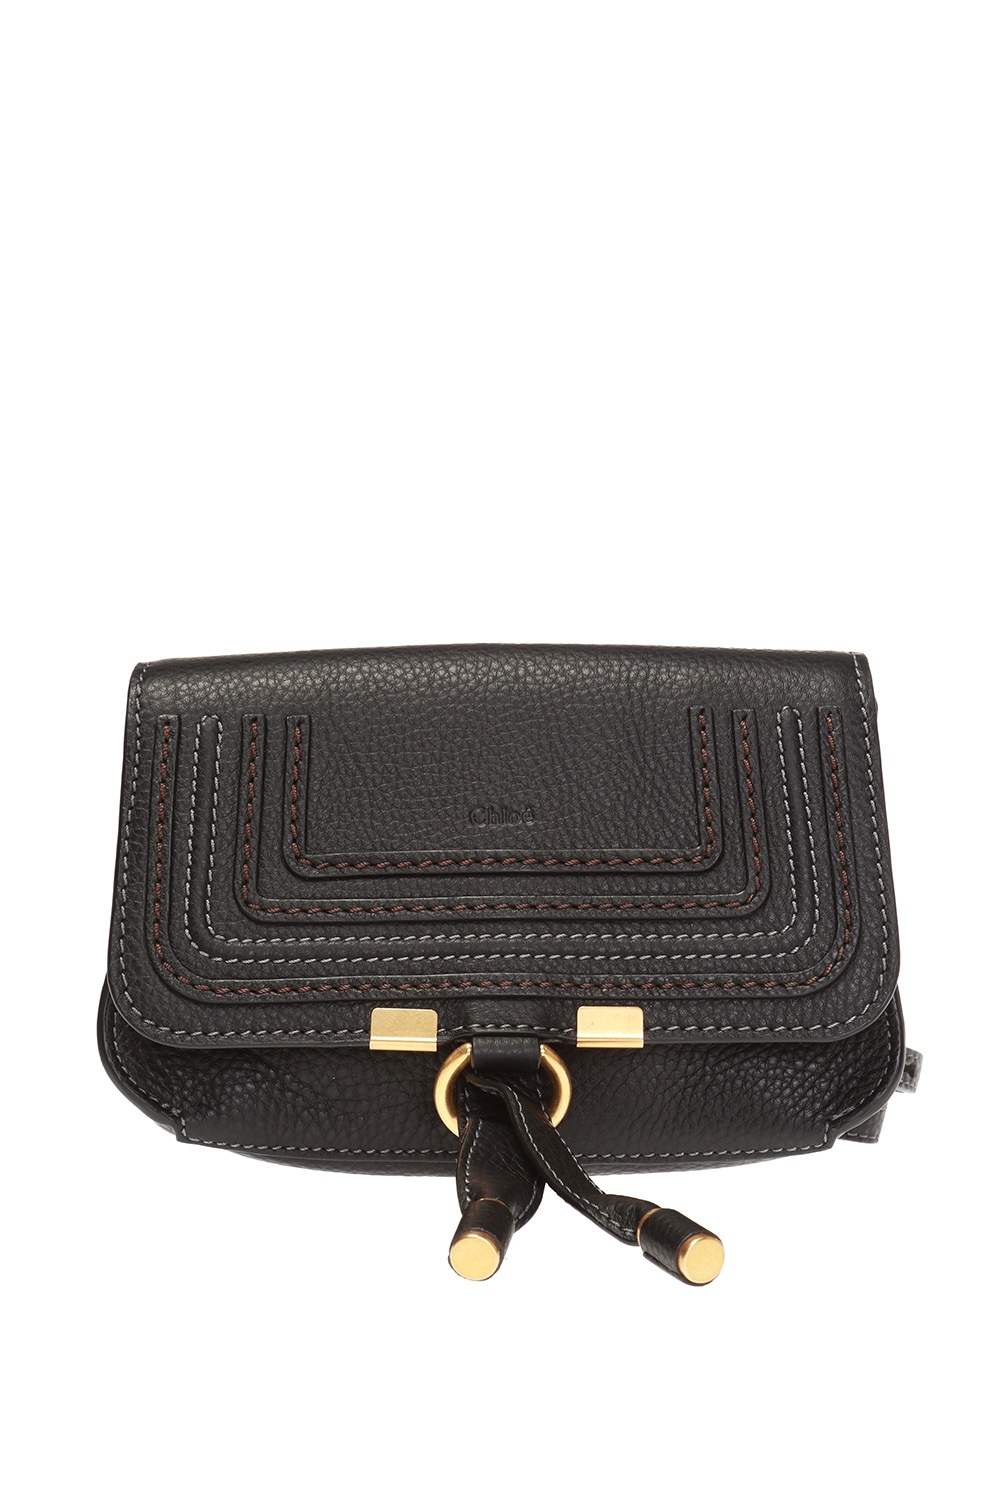 Chloé ‘Marcie’ belt bag Women's Bags Vitkac